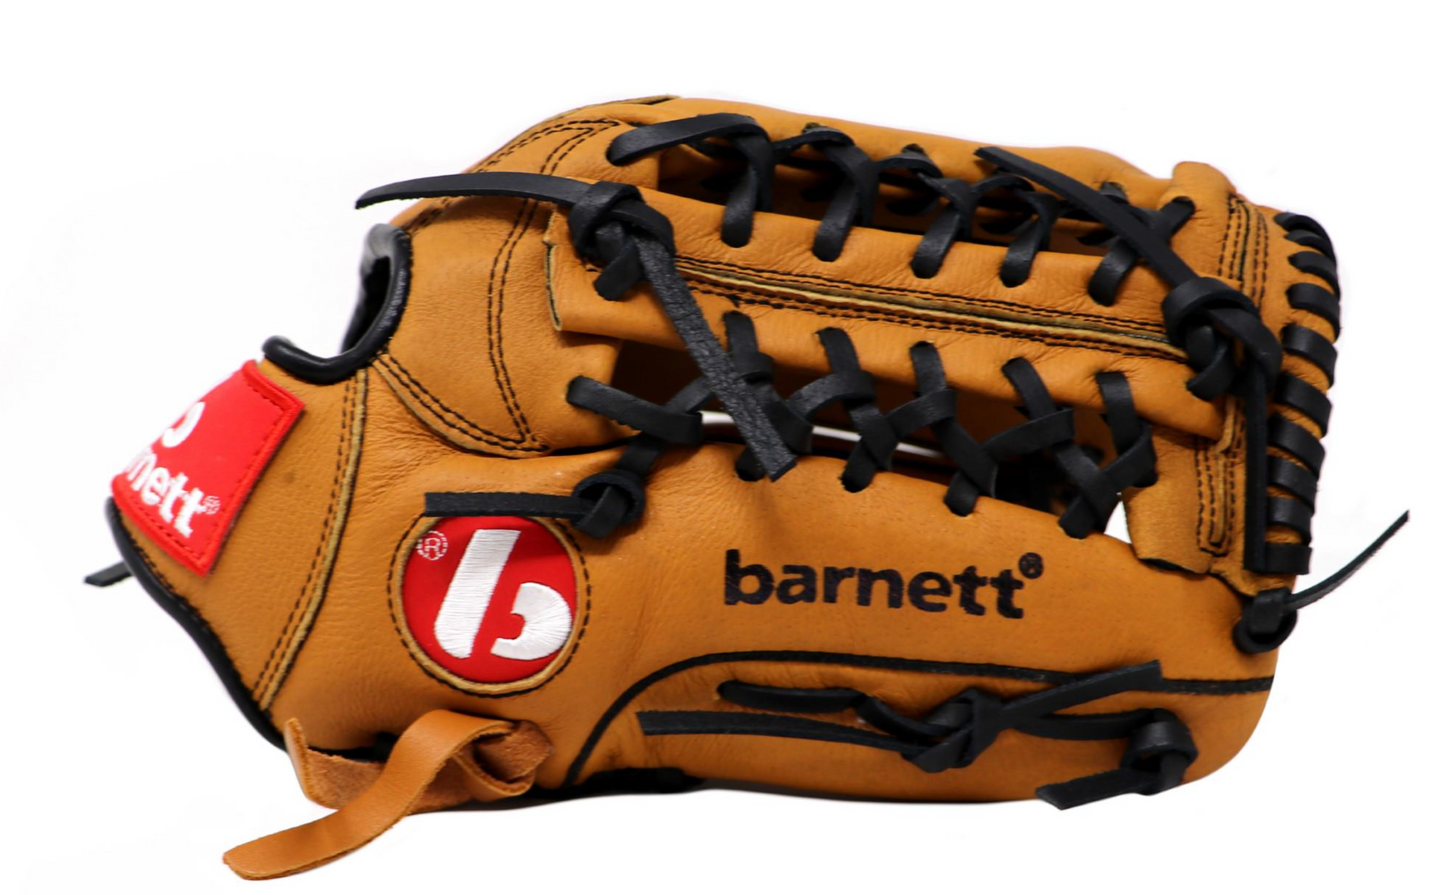 SL-125 Baseboll Handske, Läder, 12,5 (inch) infield/outfield